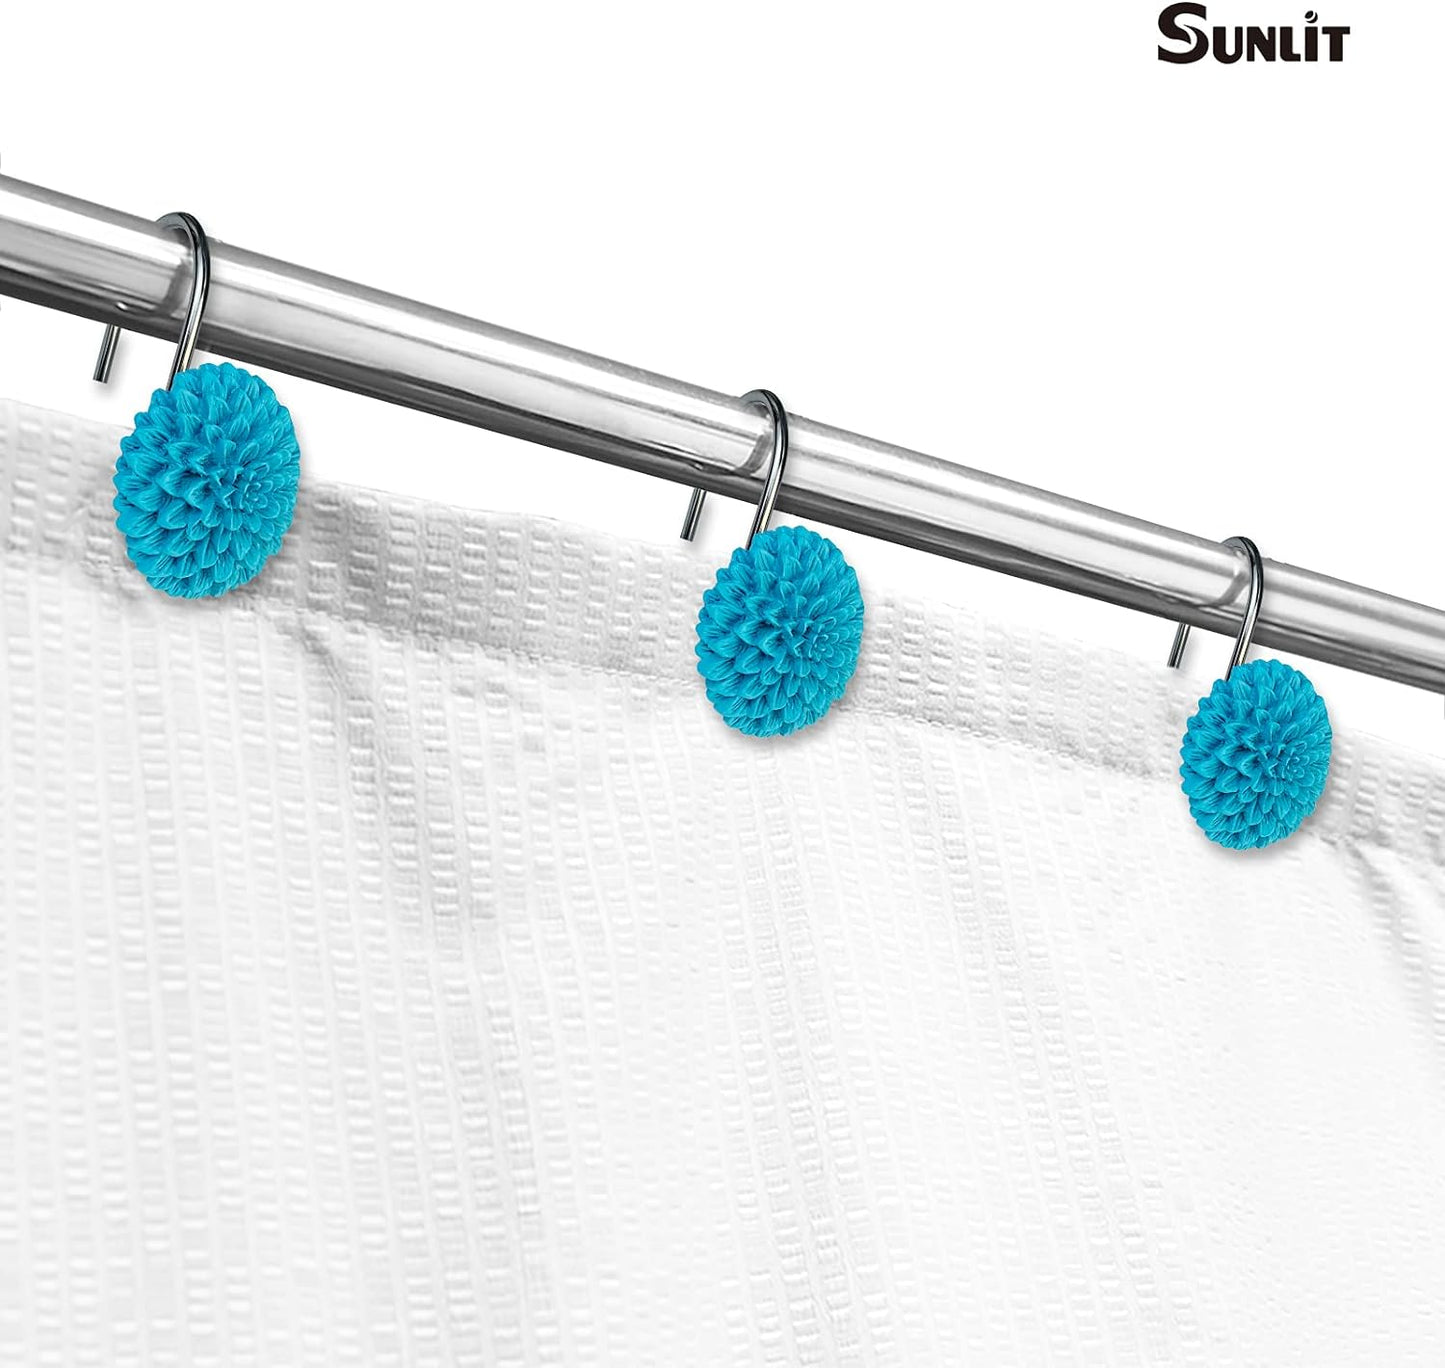 Sunlit Decorative Floral Shower Curtain Hooks, Turquoise Dahlia Pinnata Flower Shower Curtain Rings, Resin, Bathroom Decoration Blue Shower Curtain Hooks-12 Pack